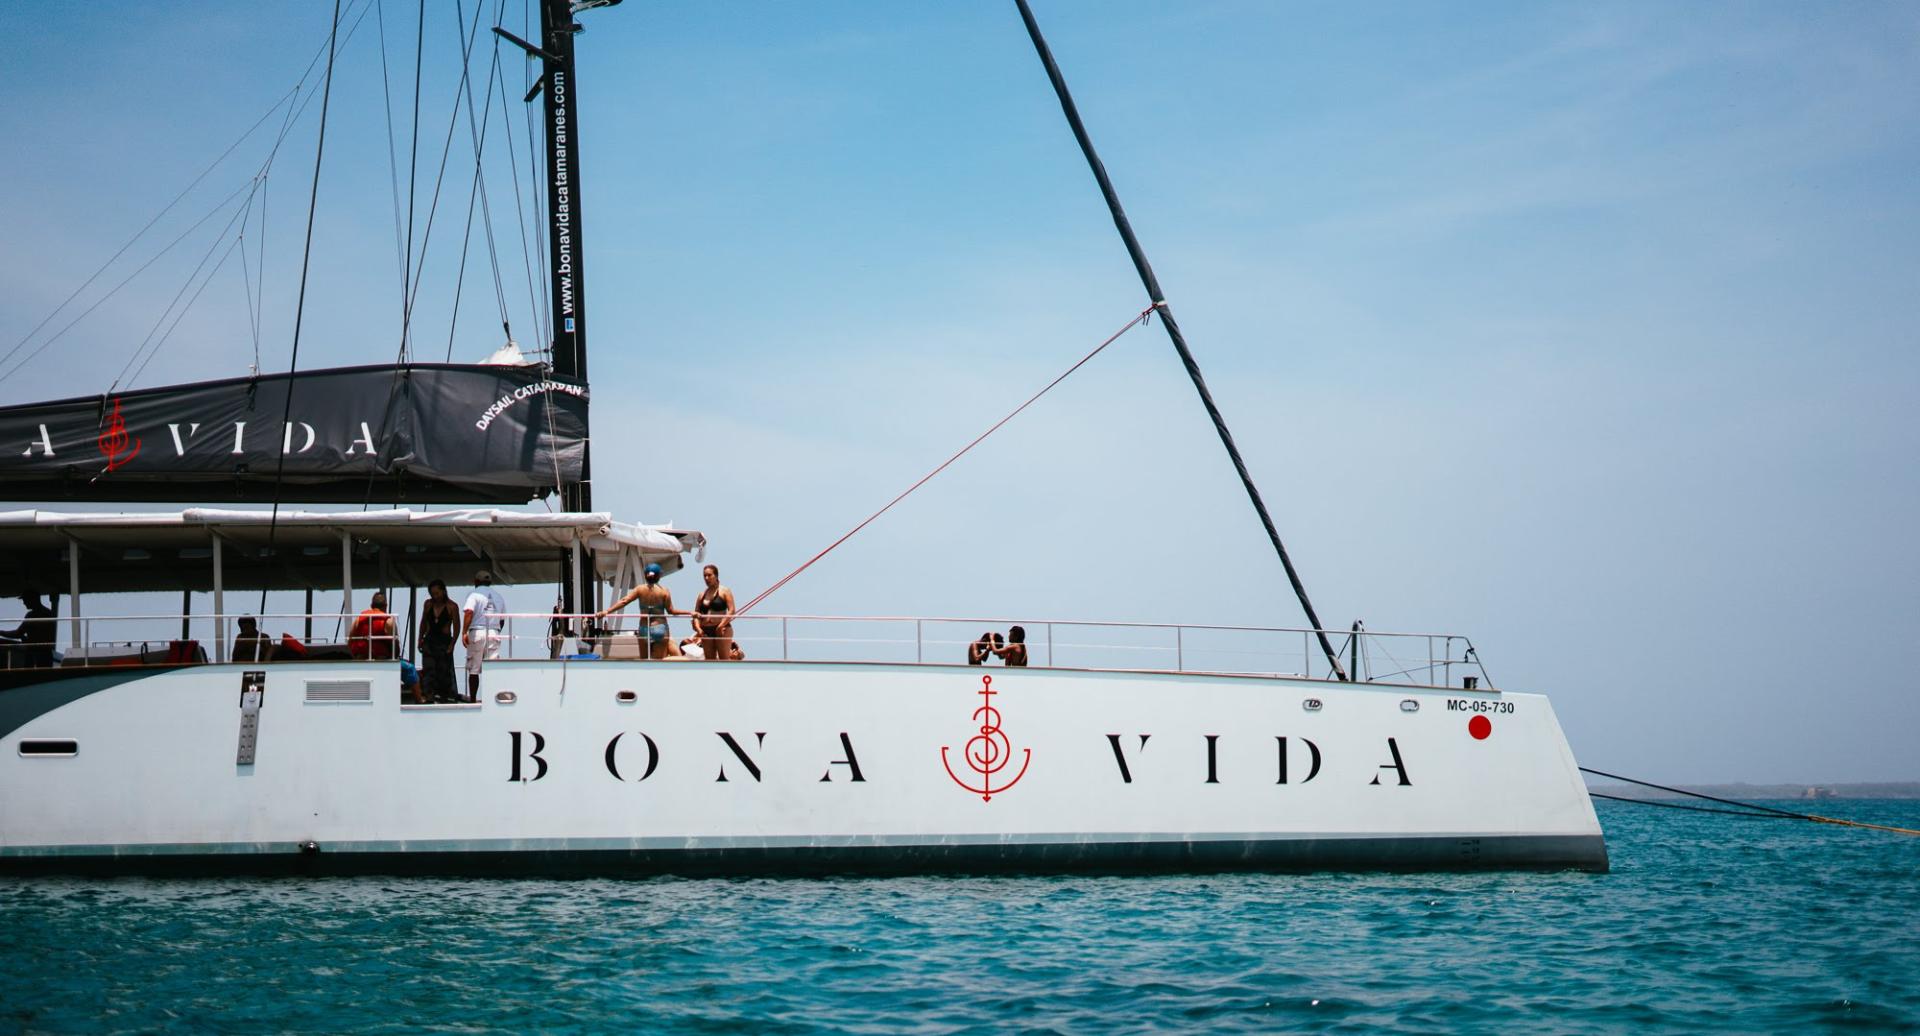 Bonavida Catamaranes' photo gallery